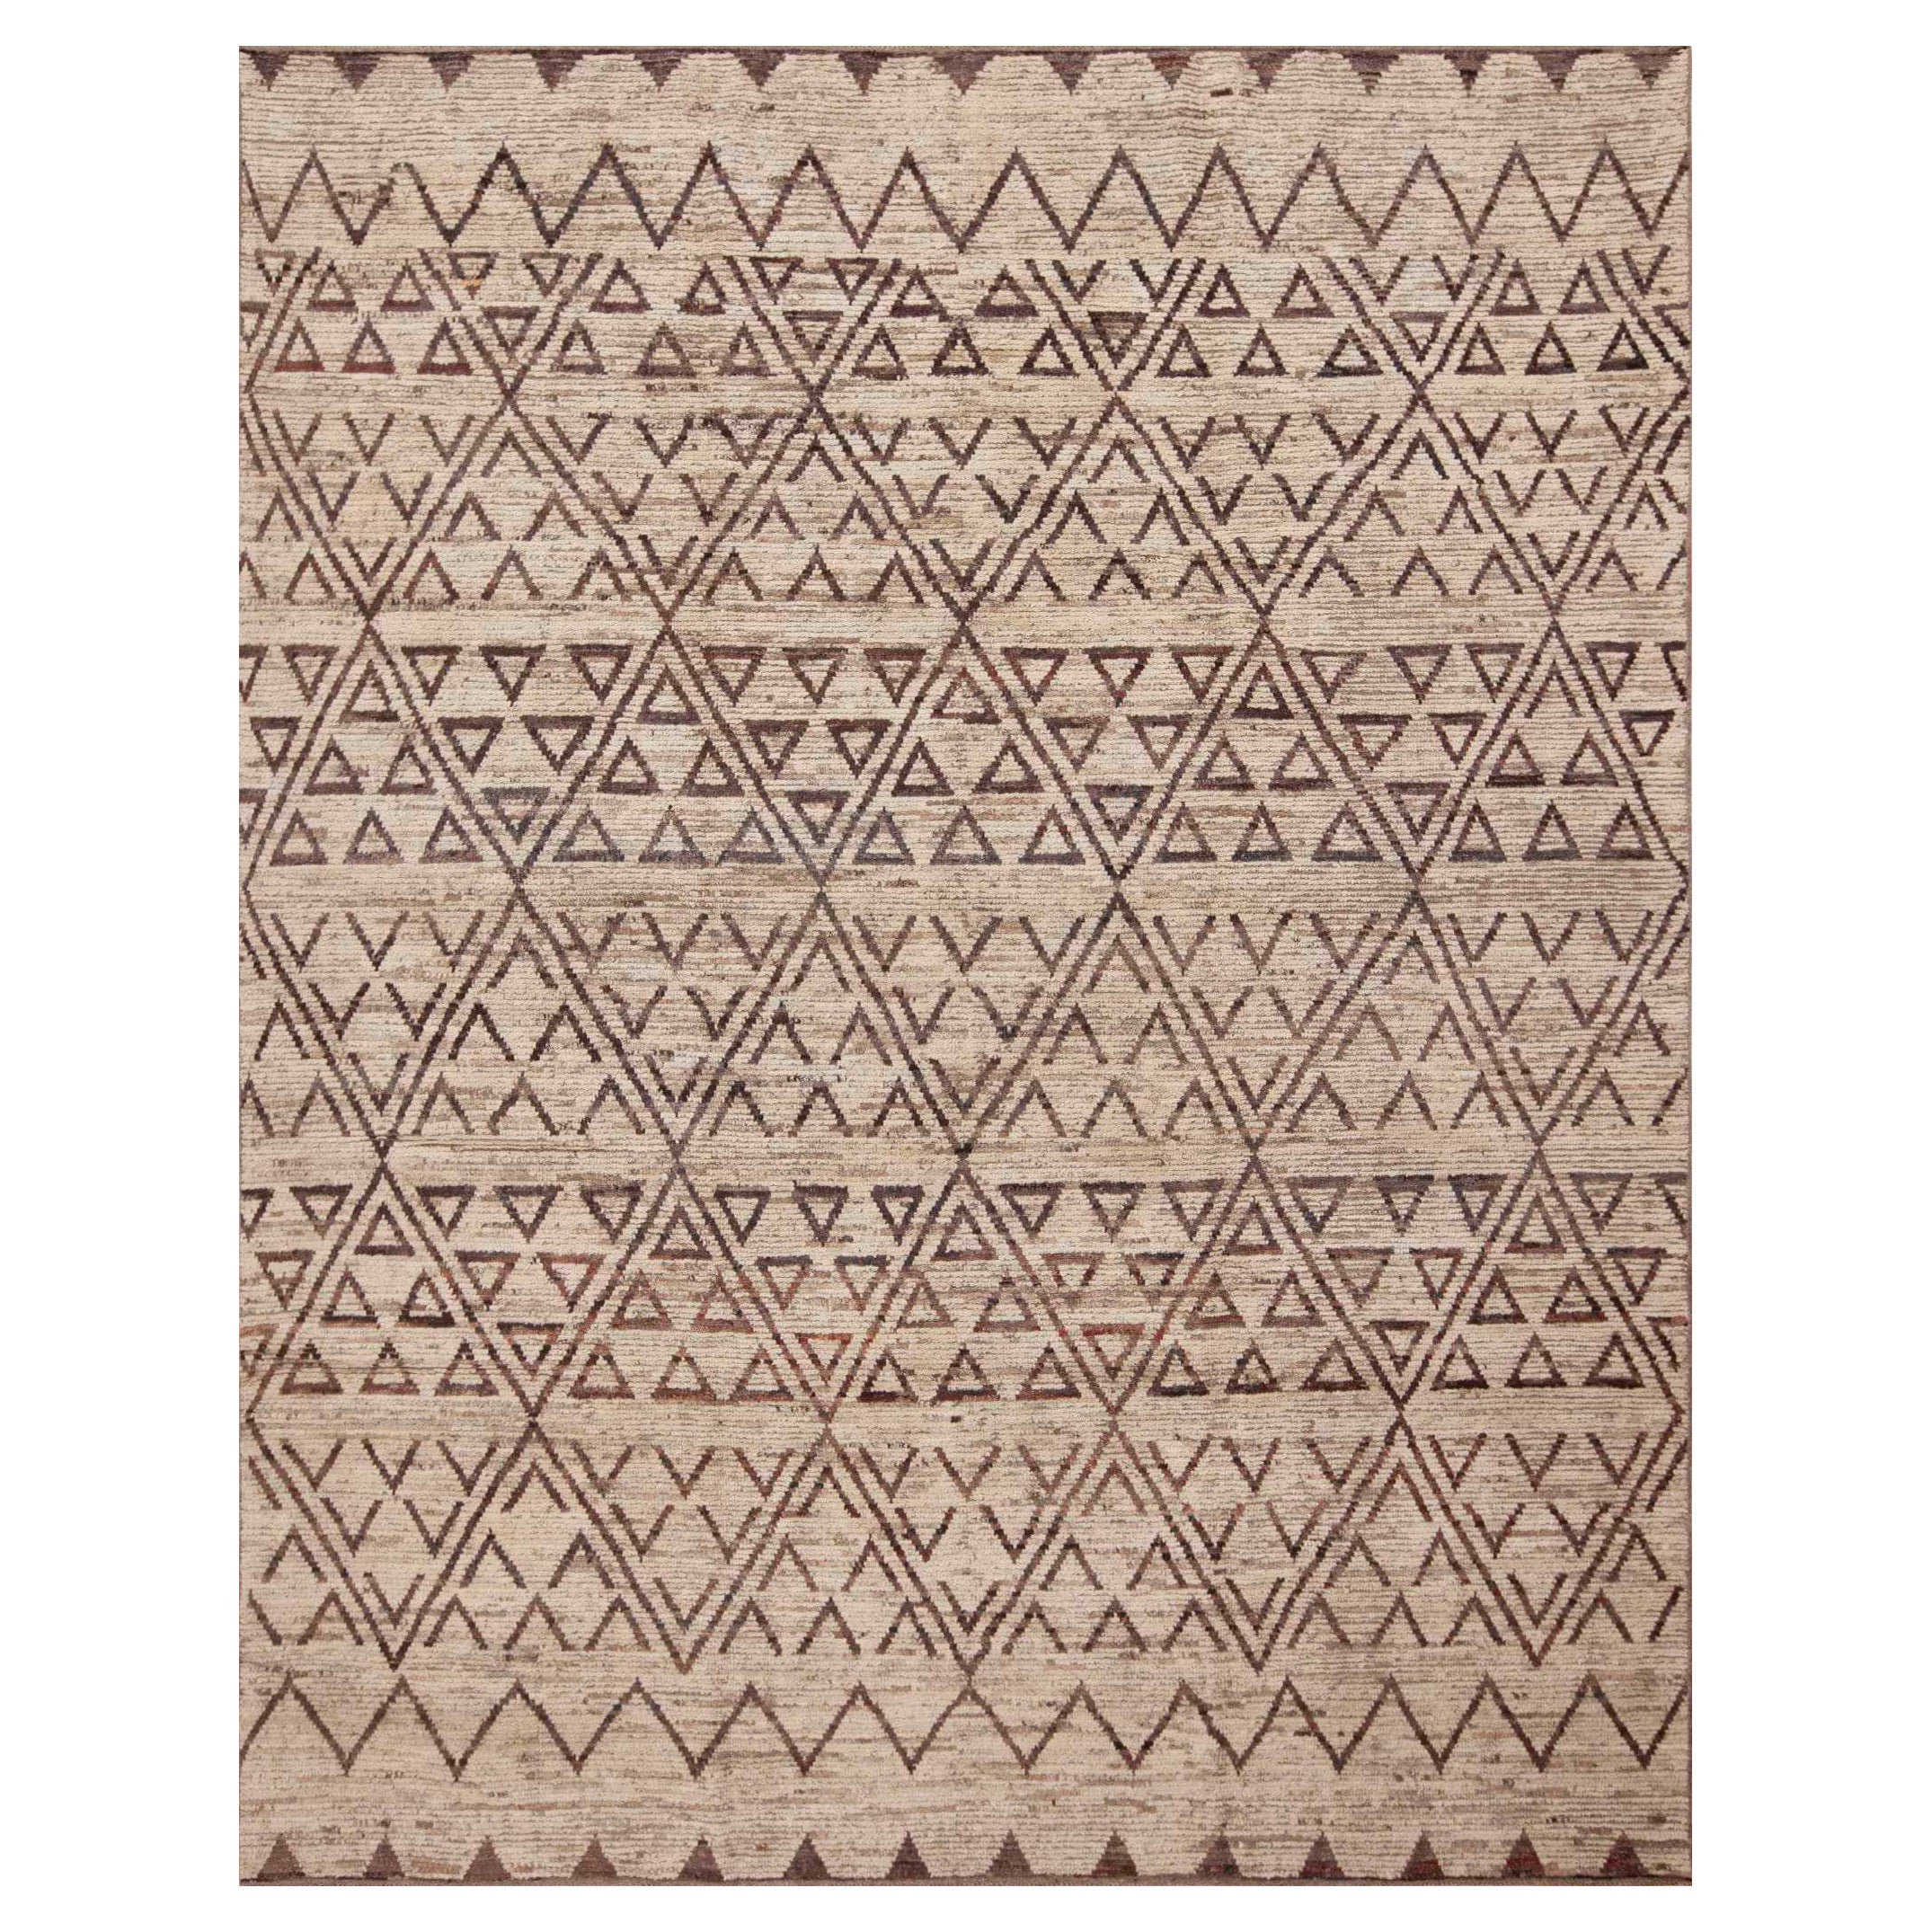 Nazmiyal Collection Tribal Nomadic Geometric Design Modern Rug 9'6" x 11'10" For Sale